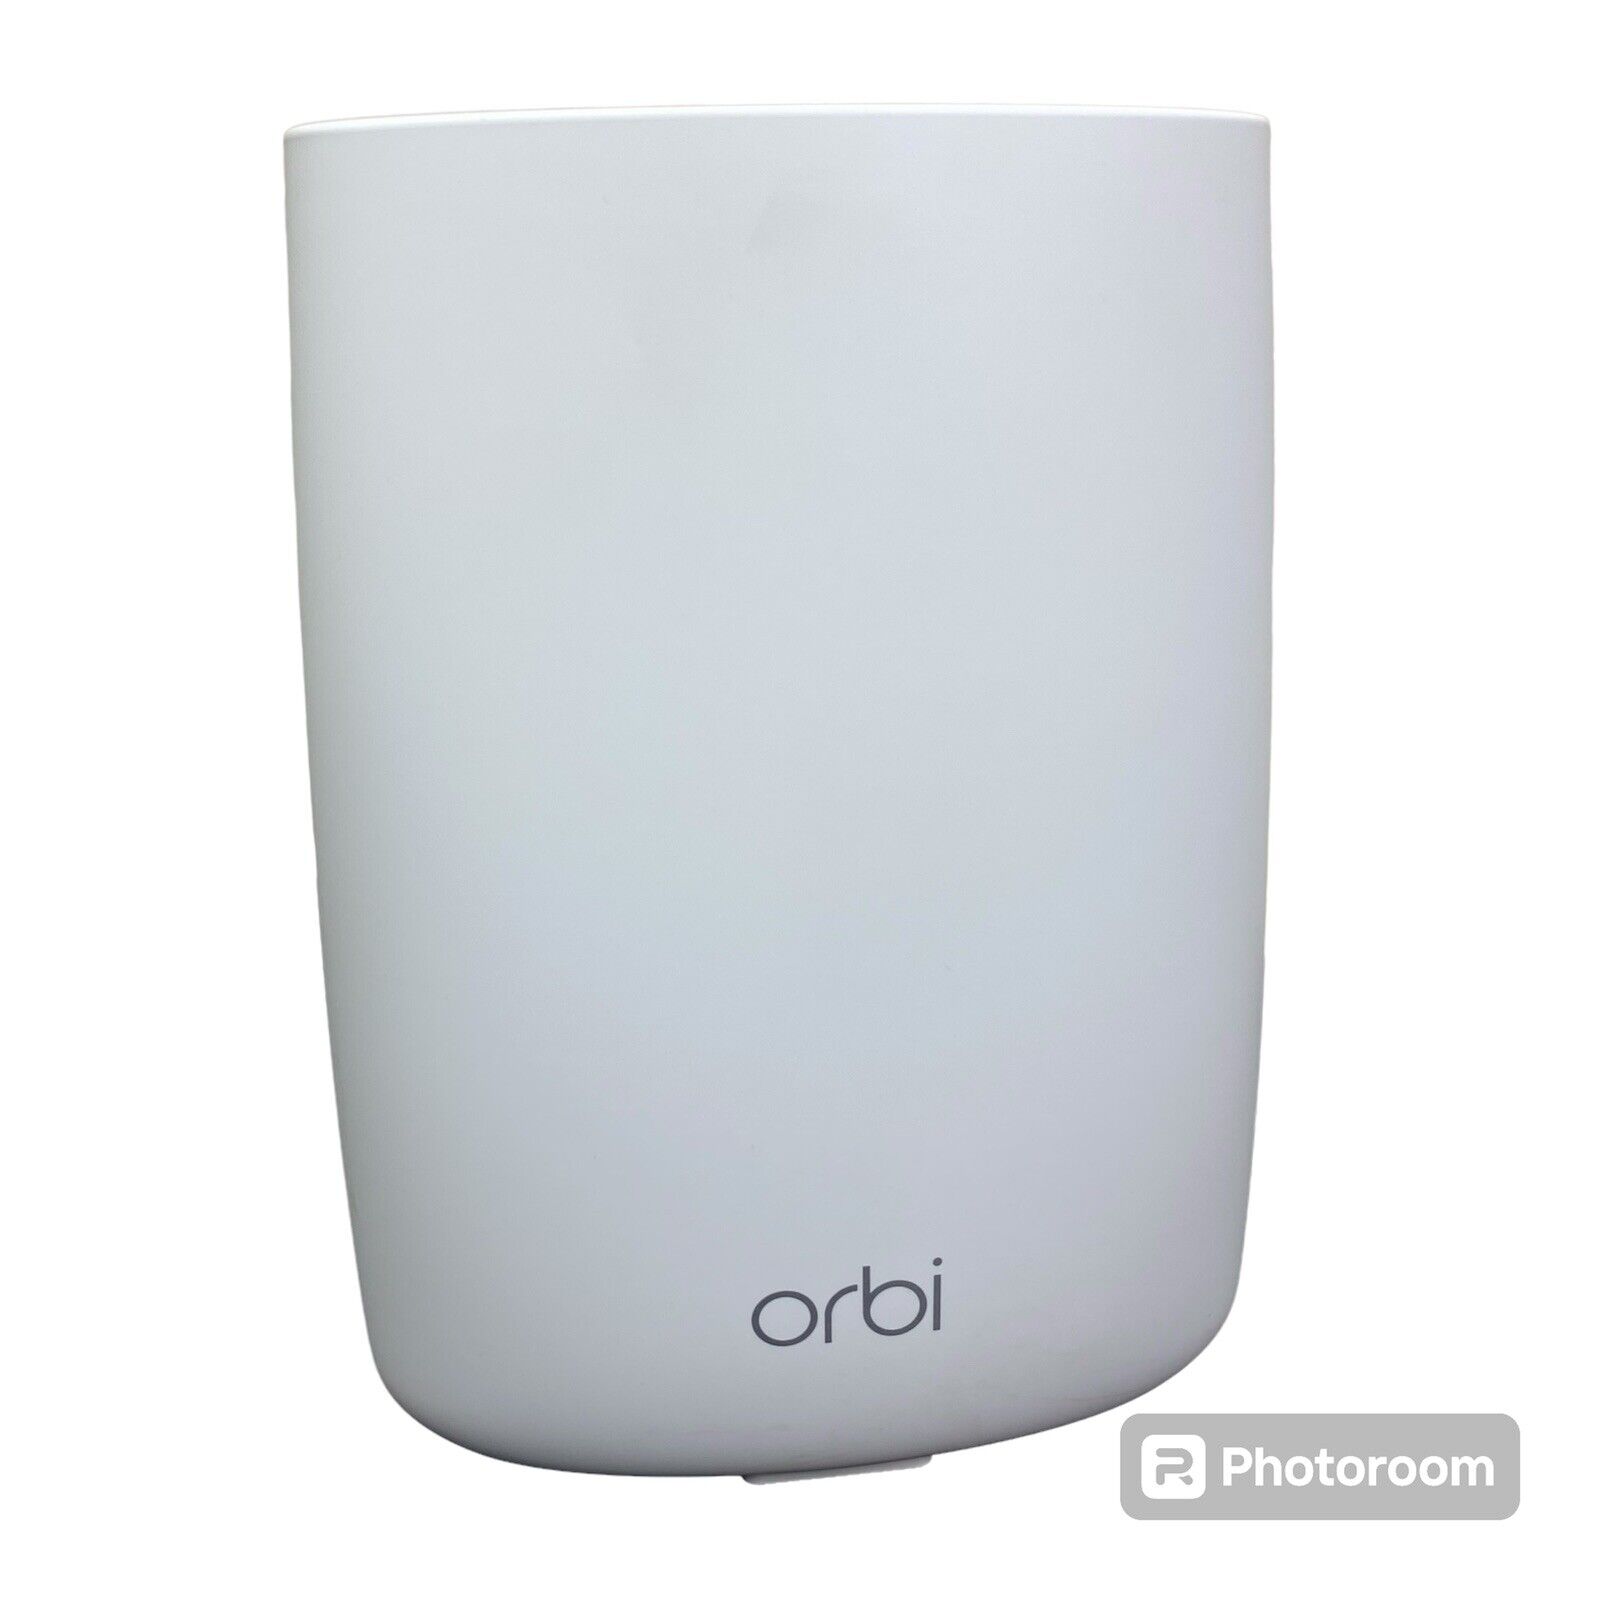 NETGEAR Orbi LBR20 4G LTE Tri-Band Wi-Fi Mesh Wireless Router No Power Cord